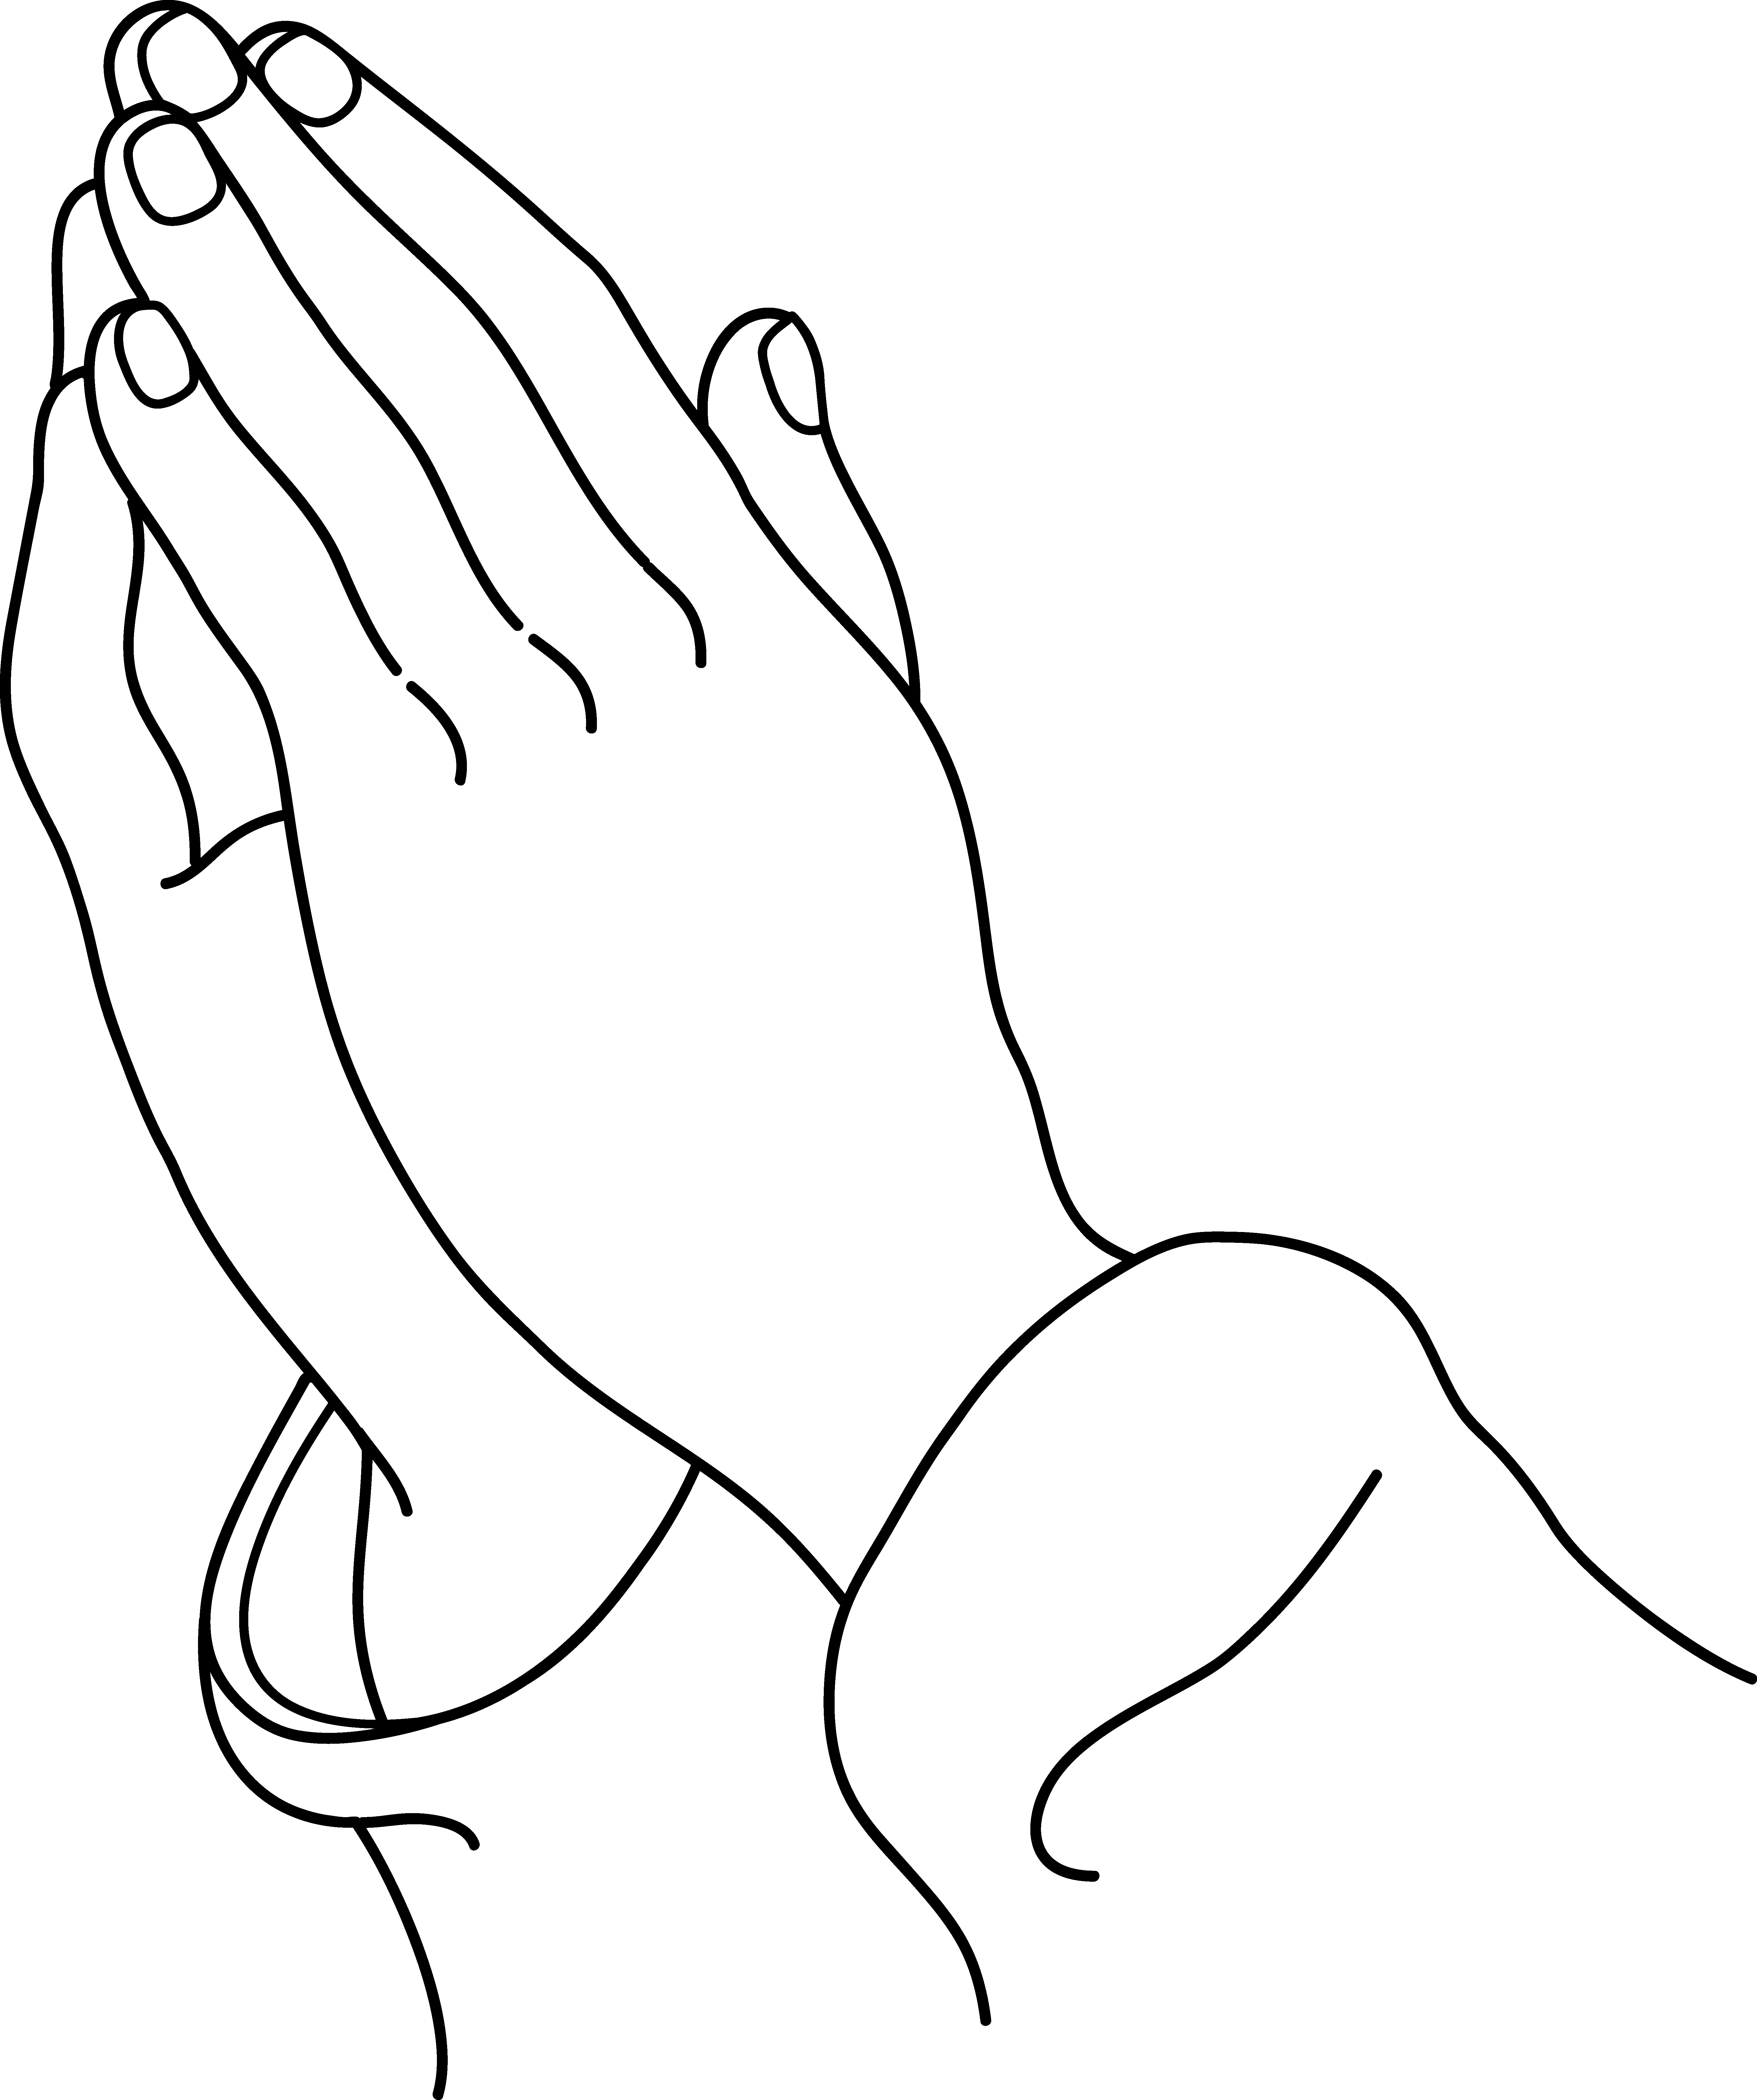 Clip Art Of Hands Openprayinghandsclipart Praying Hands Clipart